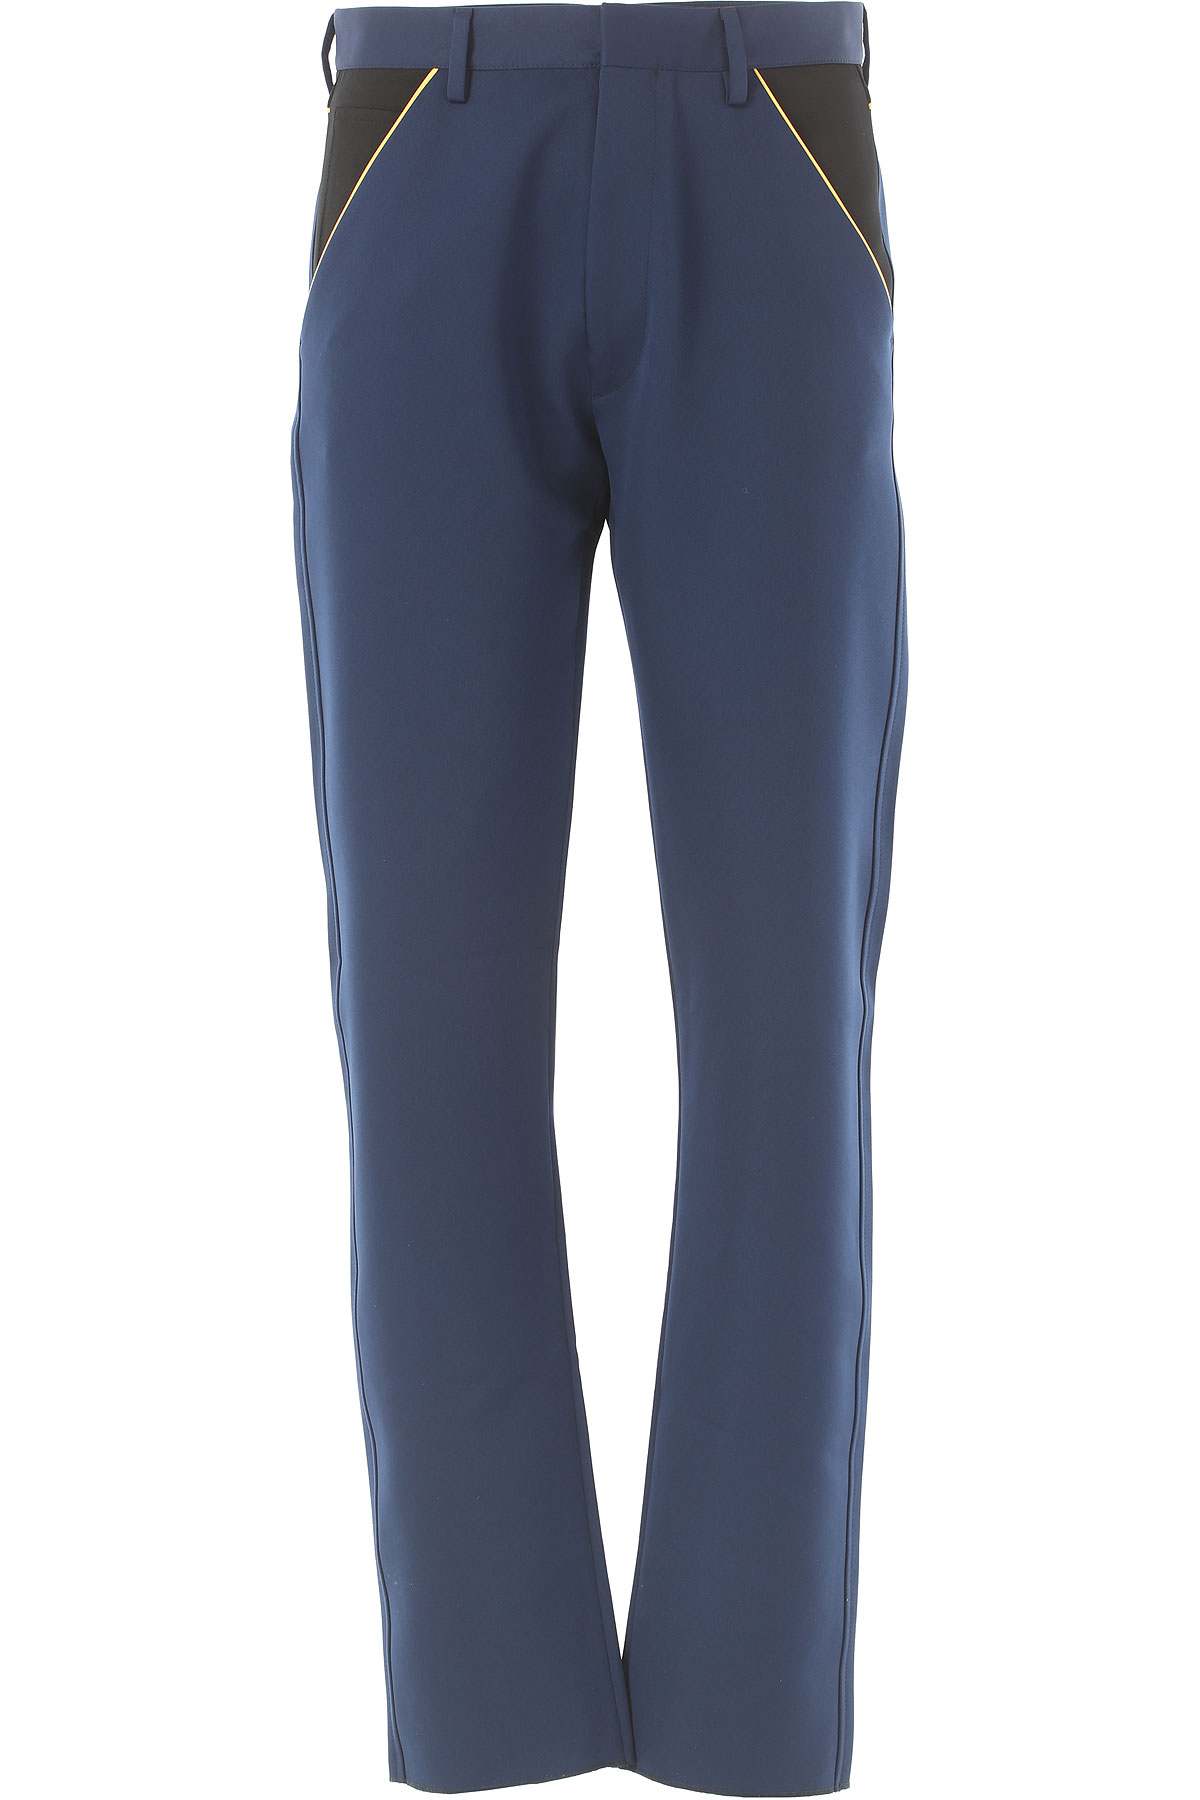 Prada Pantalon Homme Outlet, Bleu, Polyester, 2017, 46 50